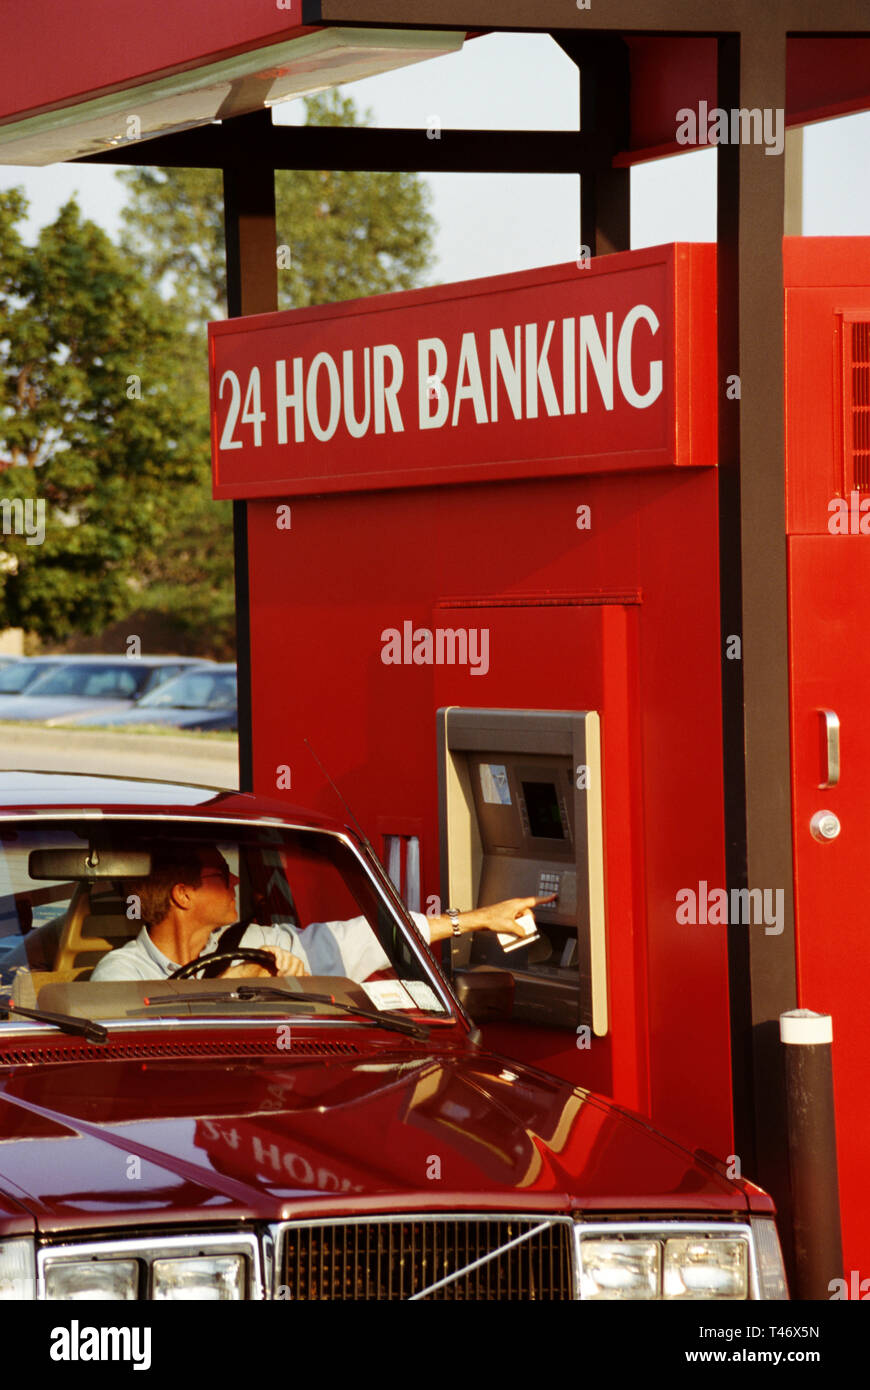 1995, Man conducting Transaction at a drive thru 24 hour ATM, USA Stock Photo